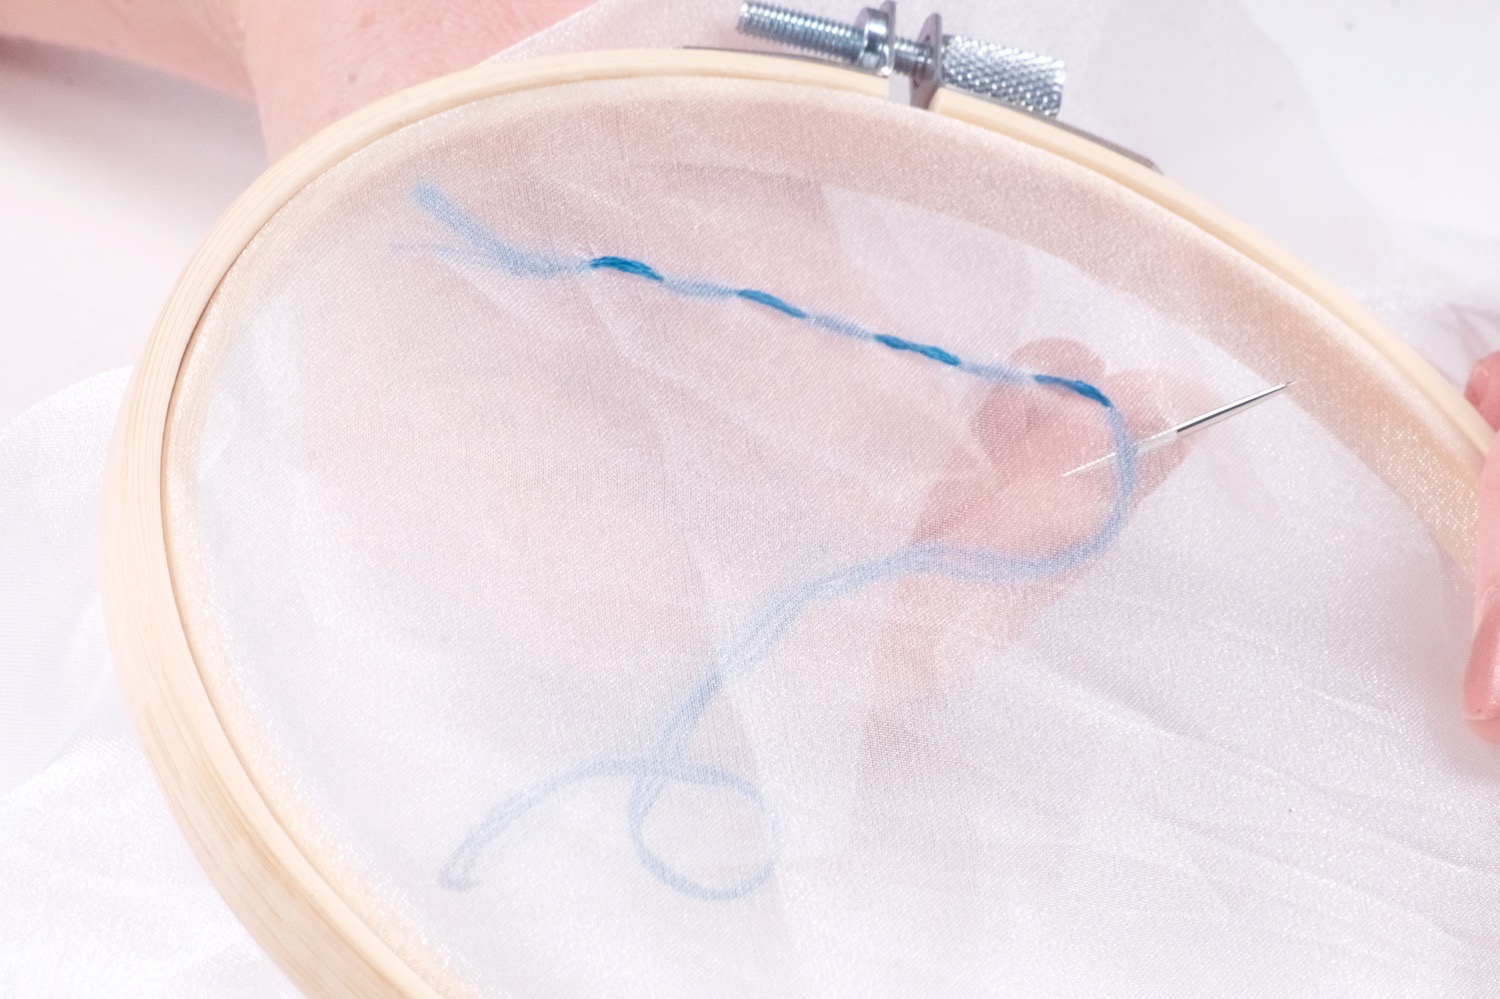 running stitch embroidery tutorial pop shop america